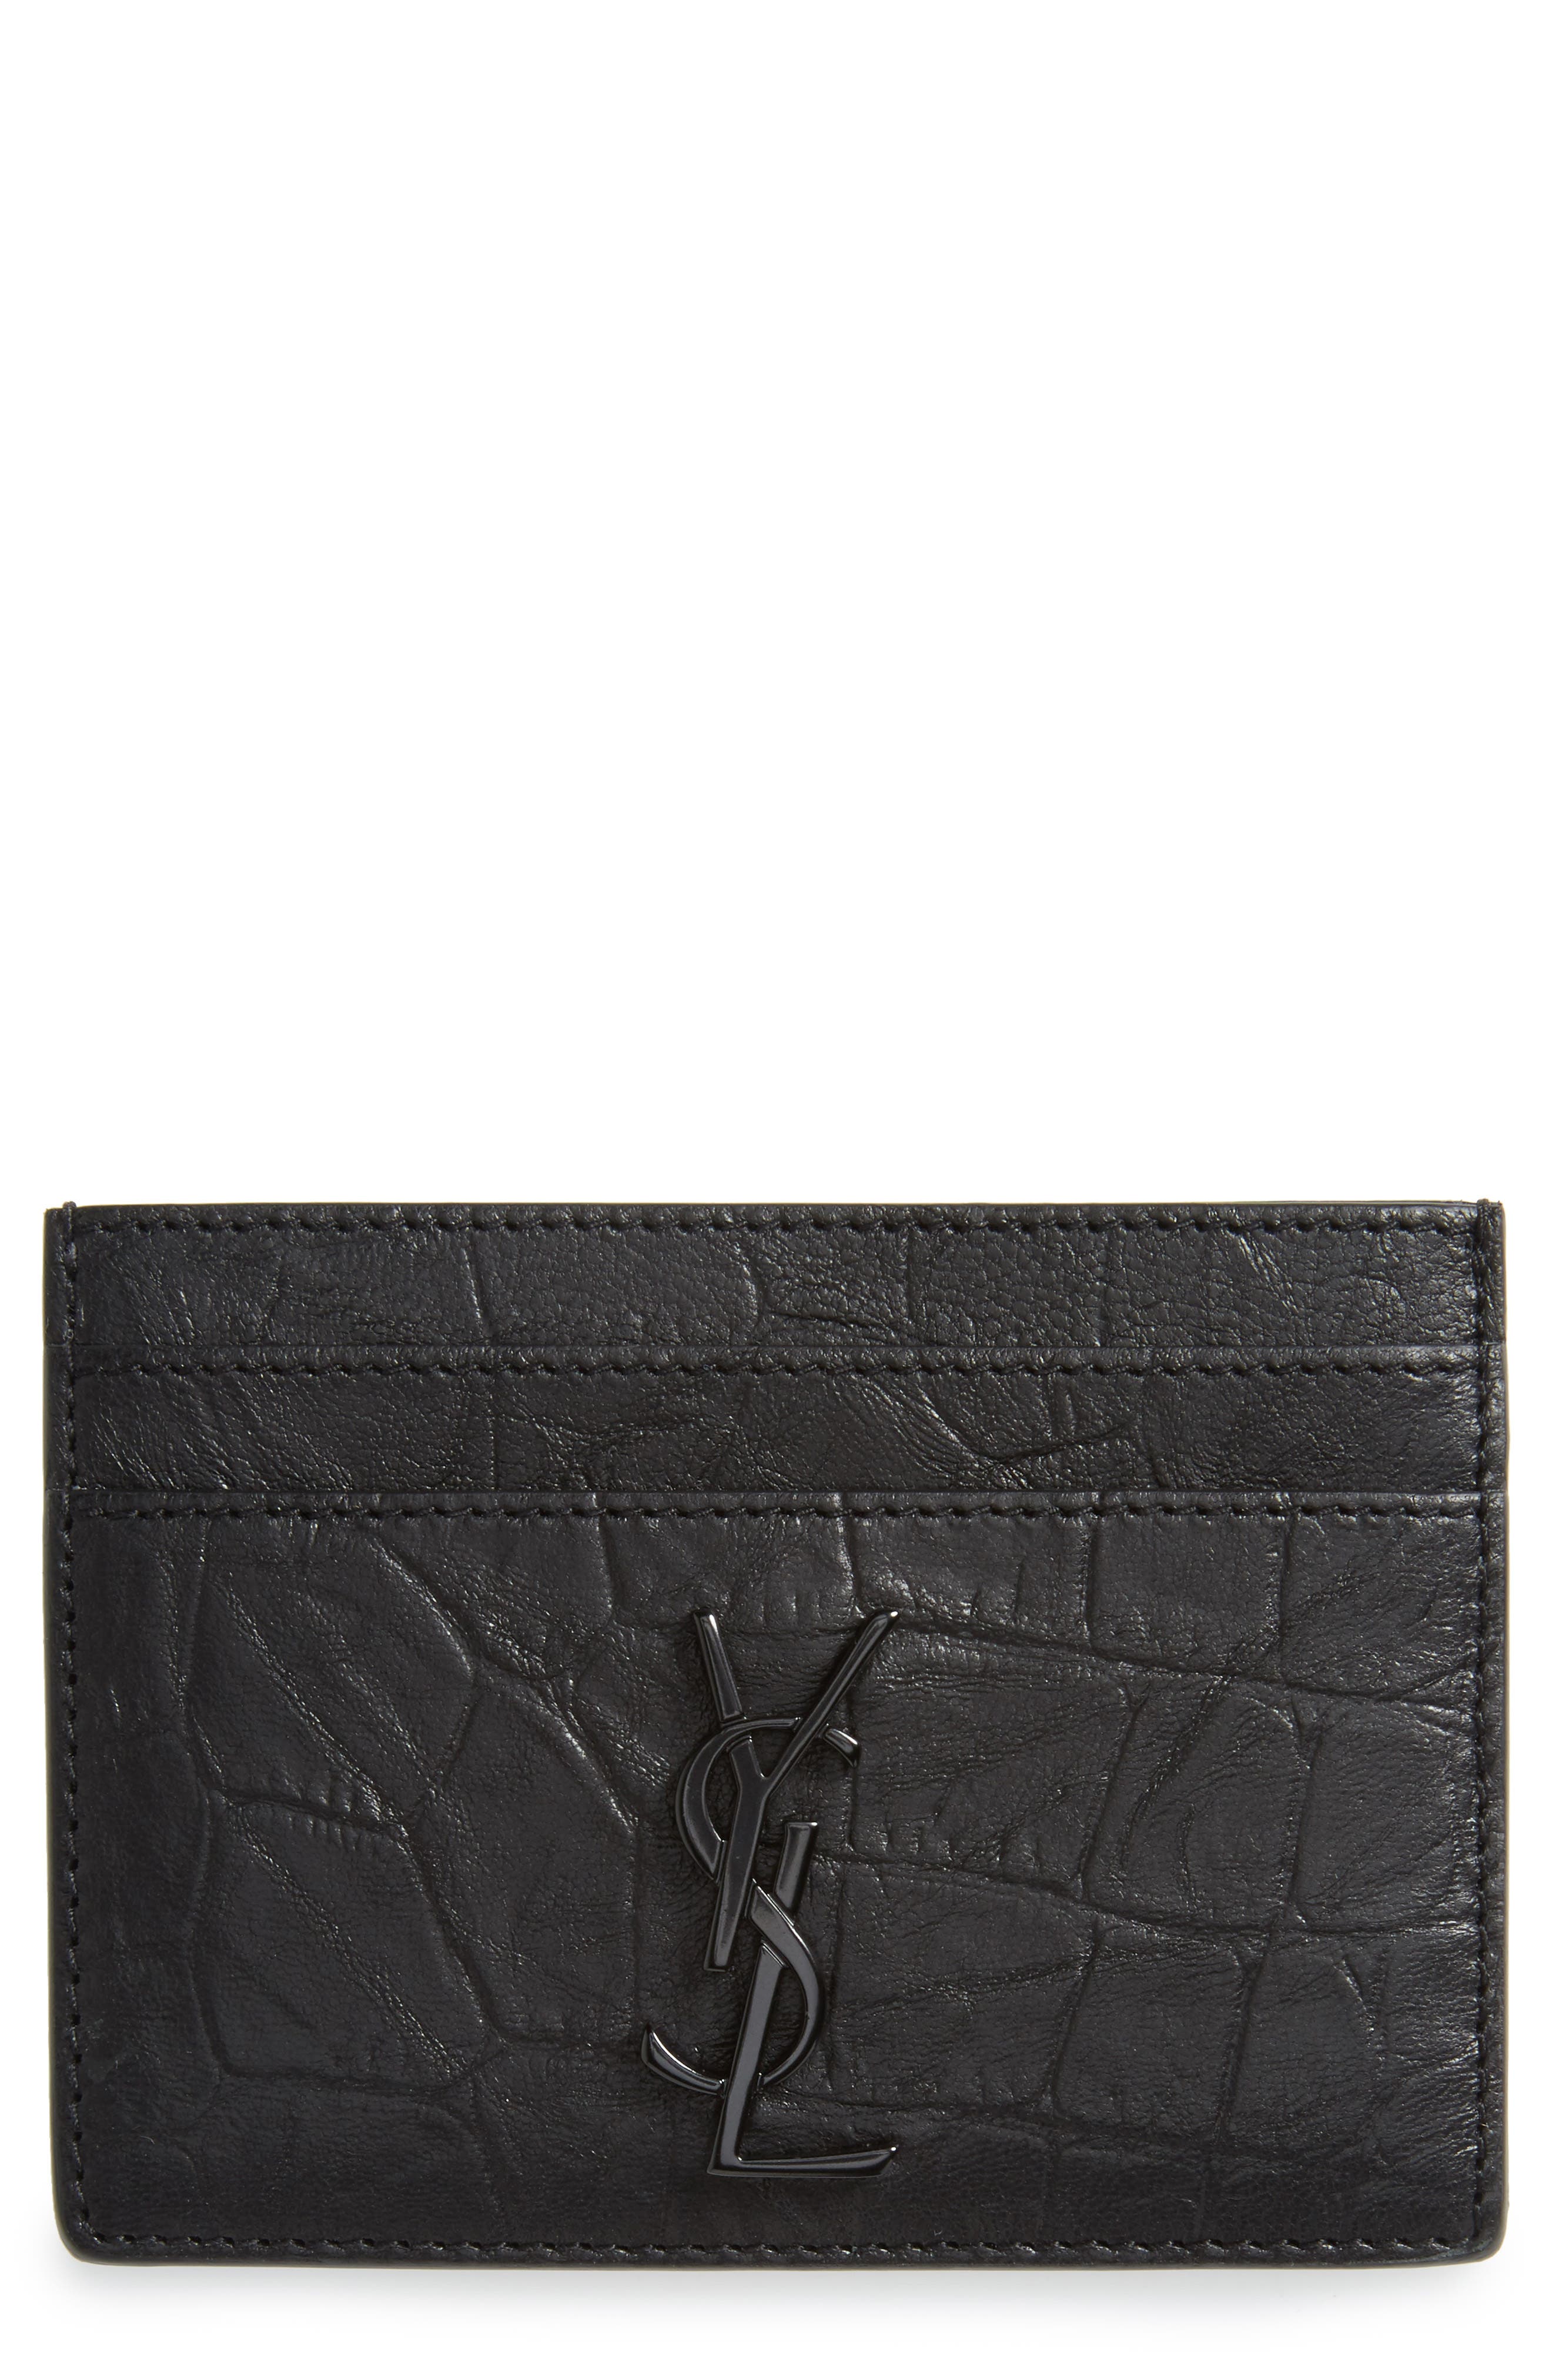 Saint Laurent Croc Embossed Calfskin Leather Card Case in Nero at Nordstrom